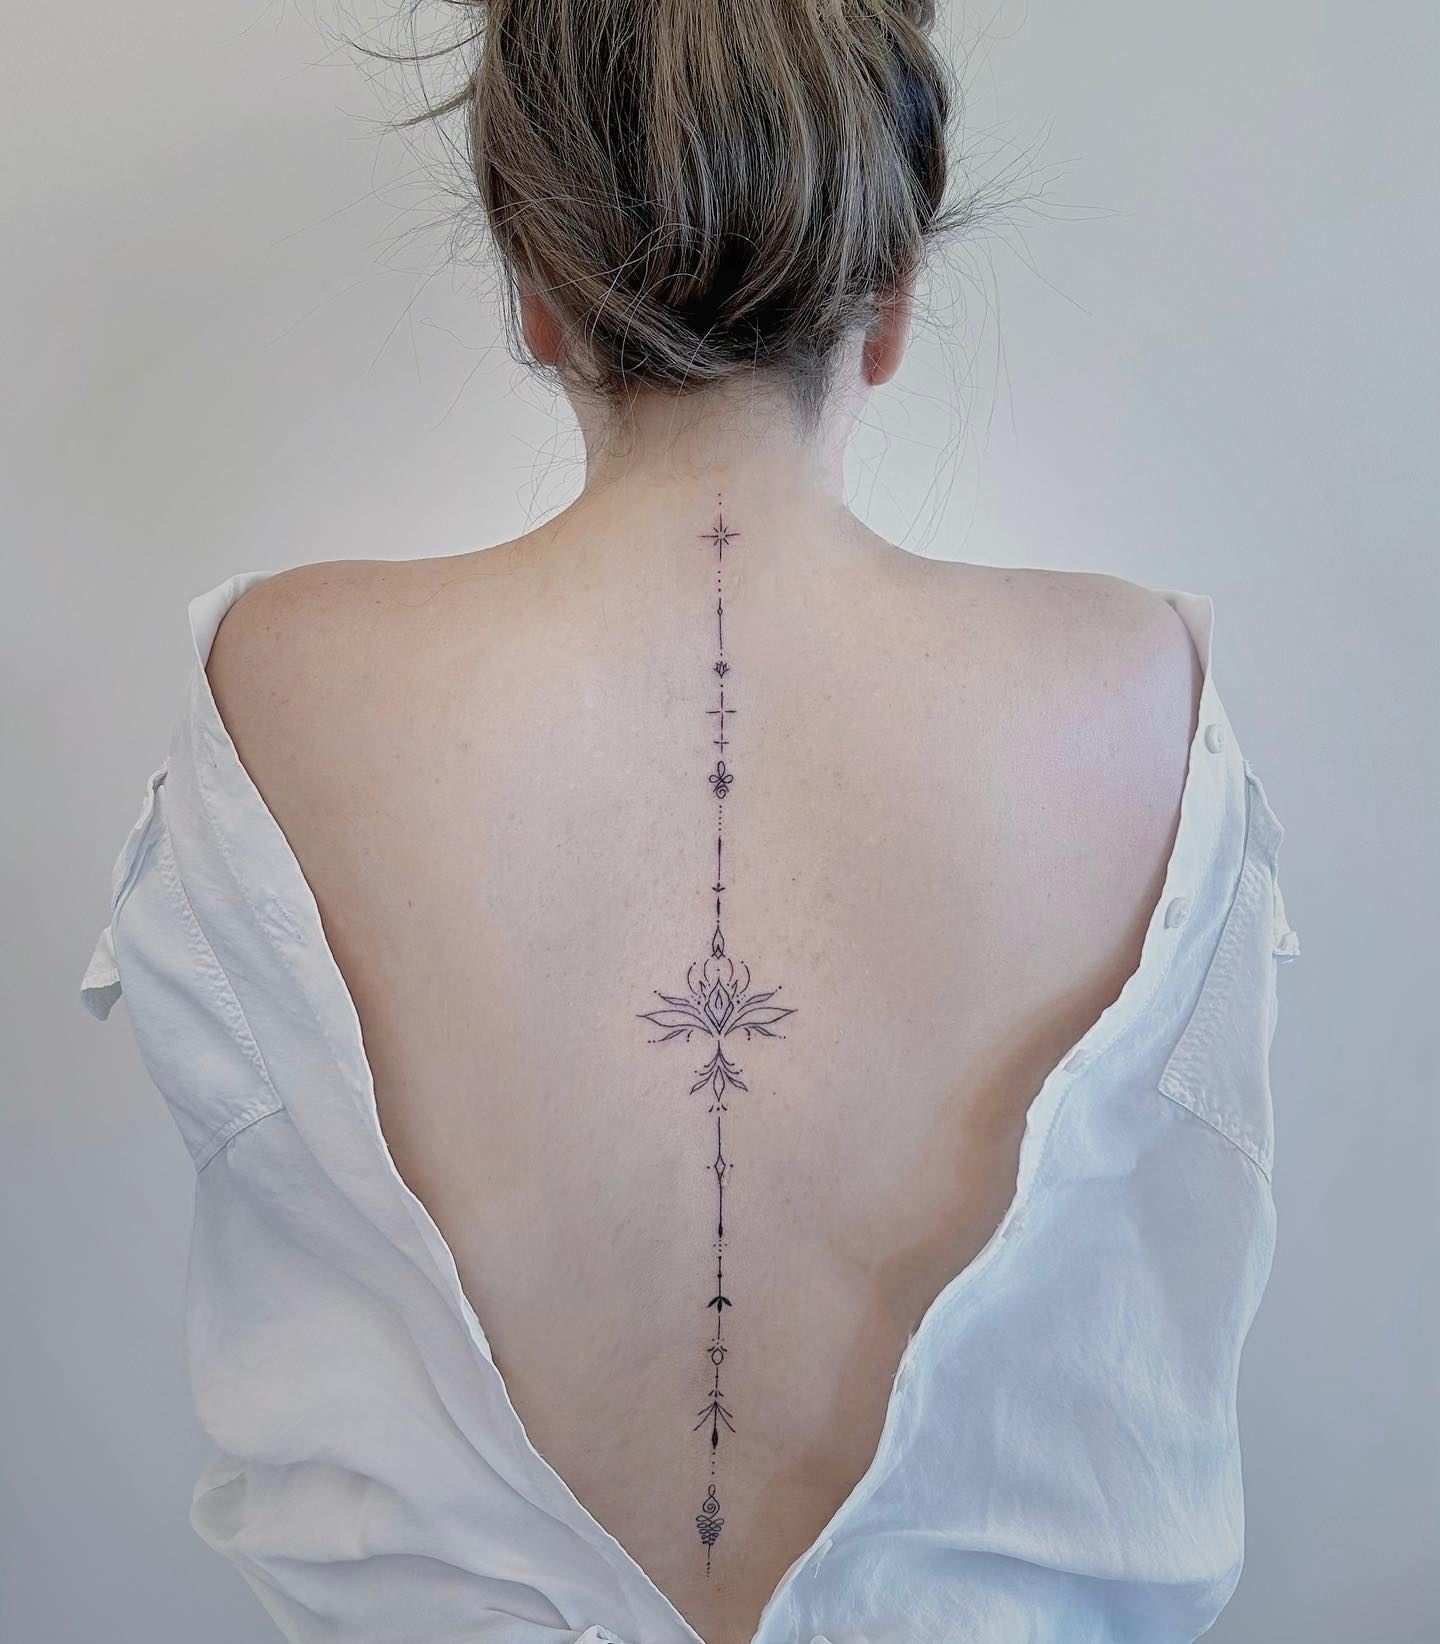 spine design ideas by tattooartist hua